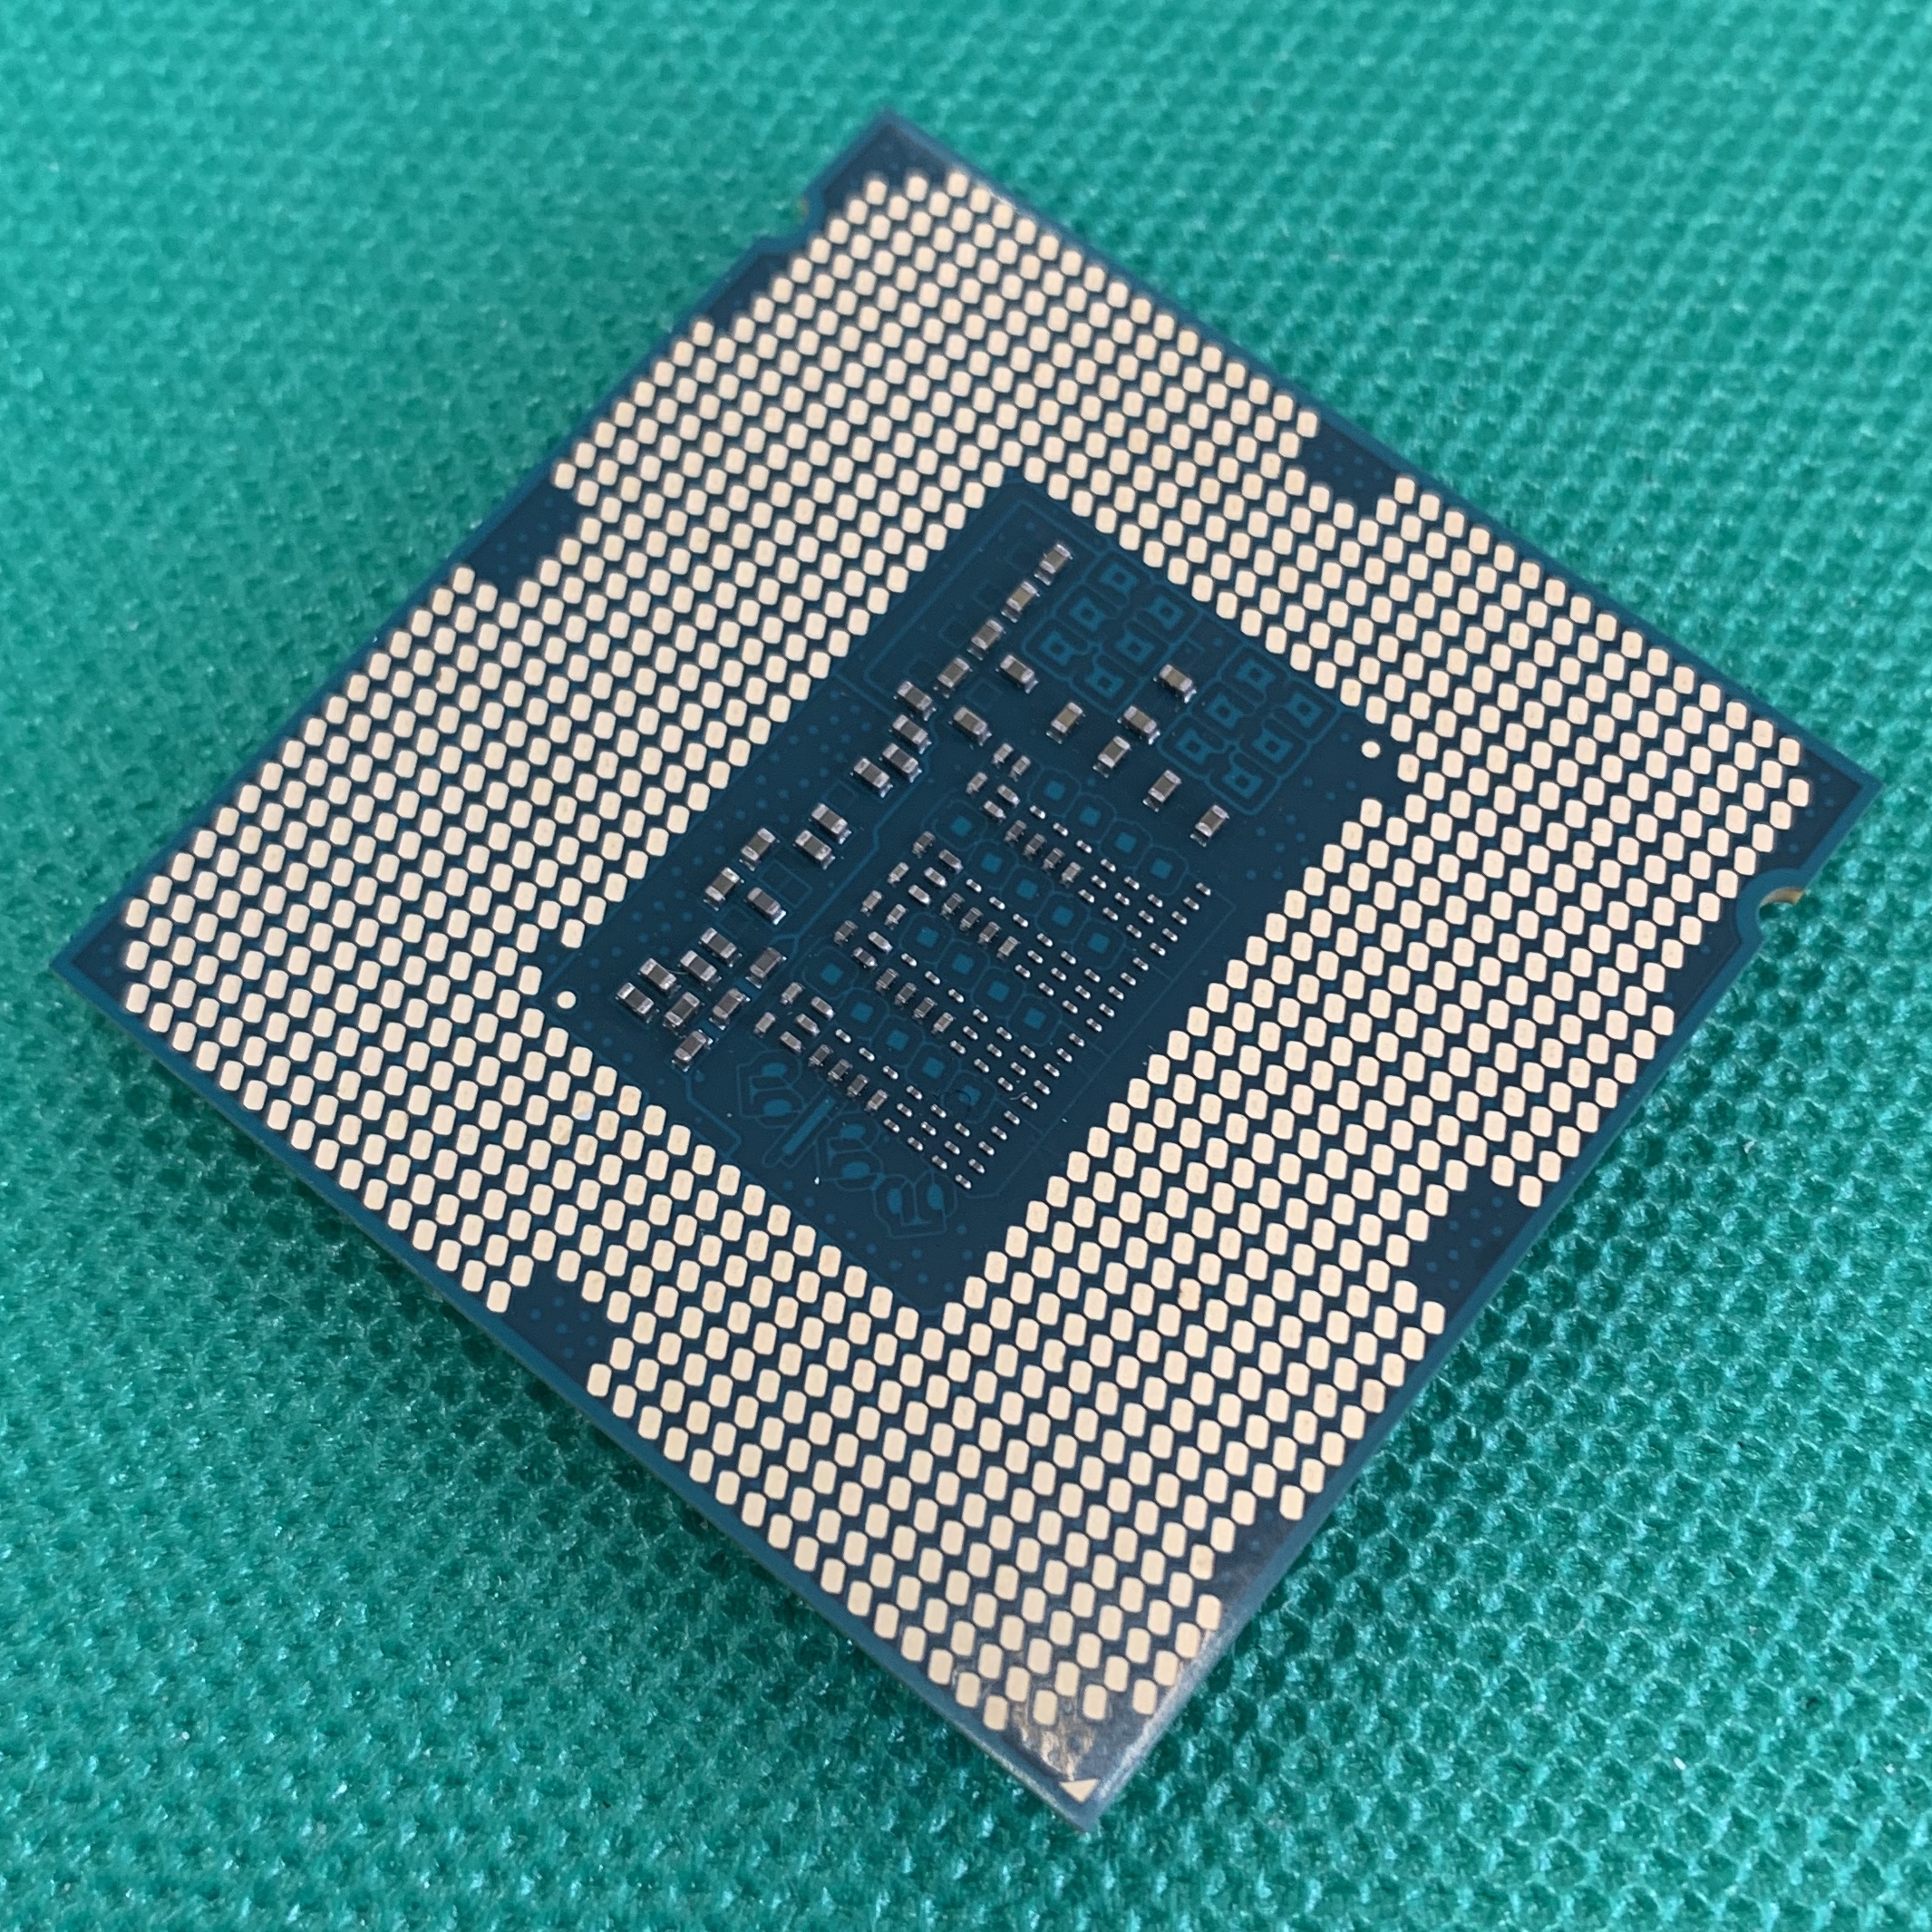 Intel core i3 какой сокет. Intel Core i5 LGA. Intel Core i5-4590. I5 4460 сокет. Socket 1150 процессоры.